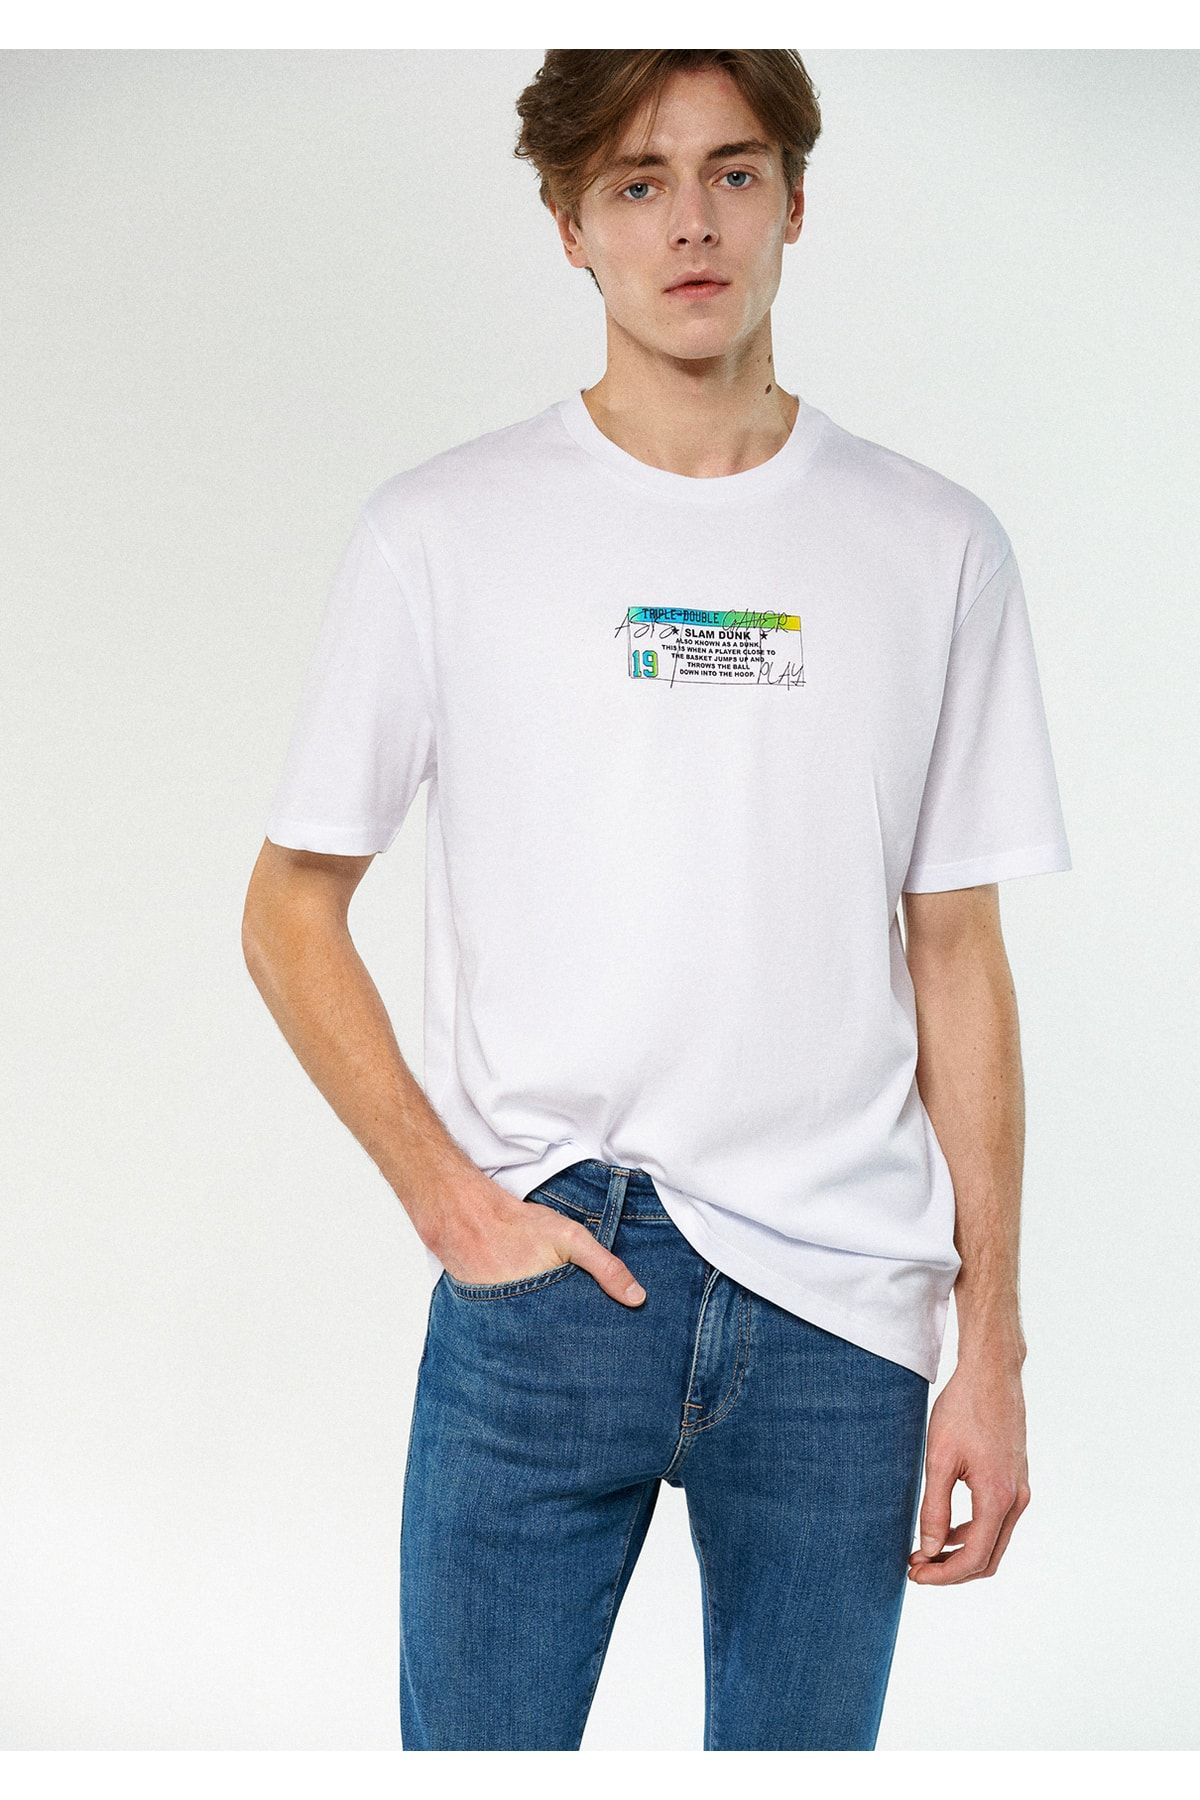 Mavi 91 تی شرت سفید چاپ شده تناسب / برش راحت و 0611106-620